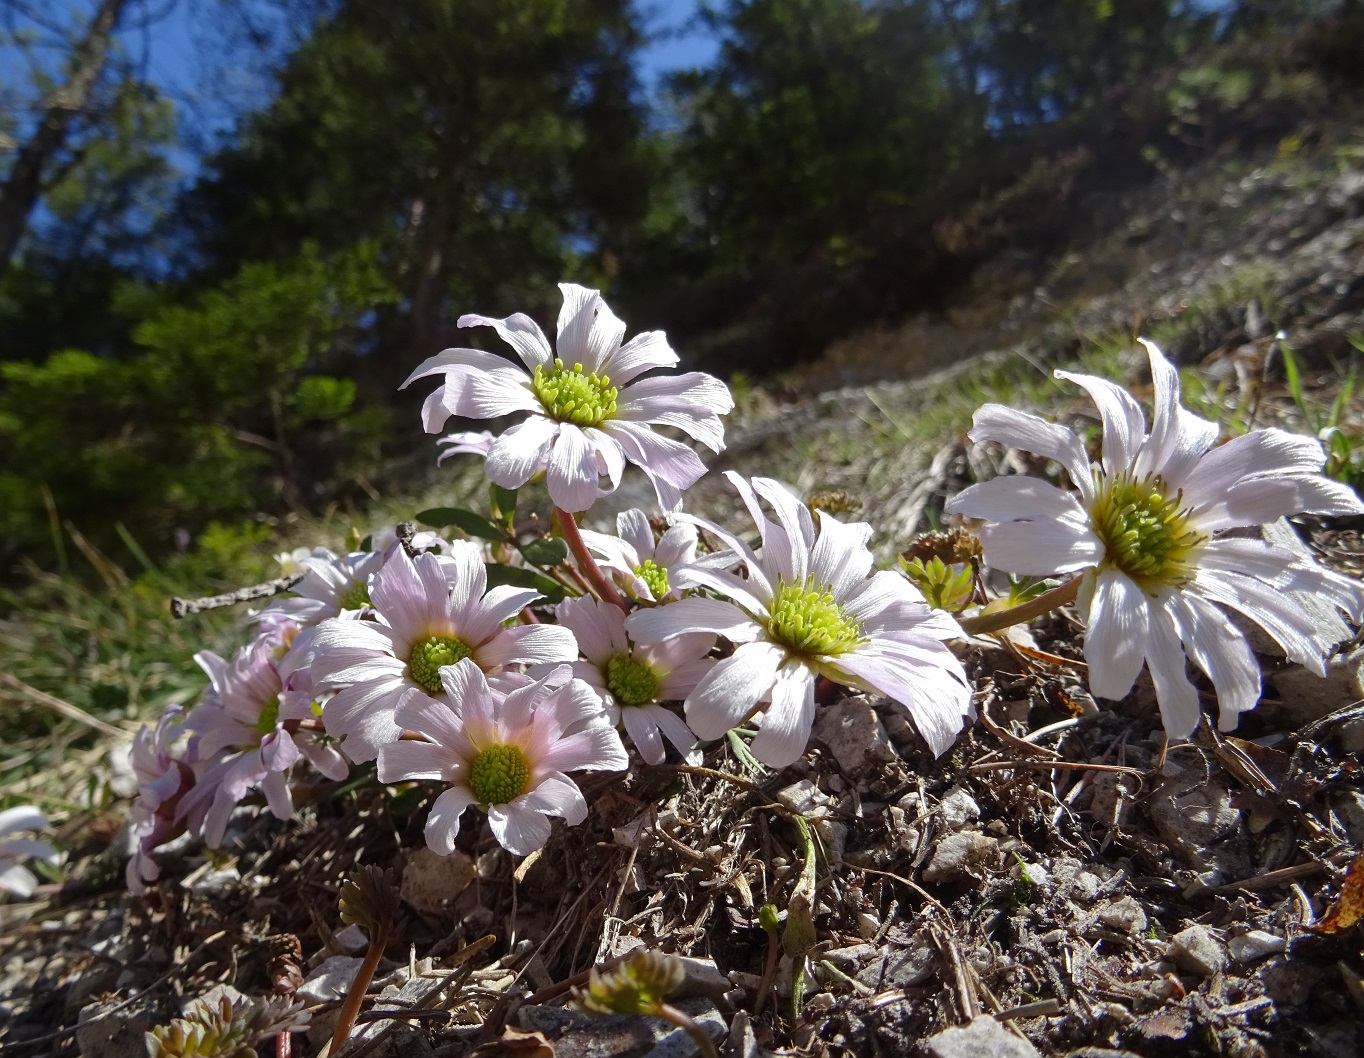 04-19-2019 Callianthemum anemonoides.jpg